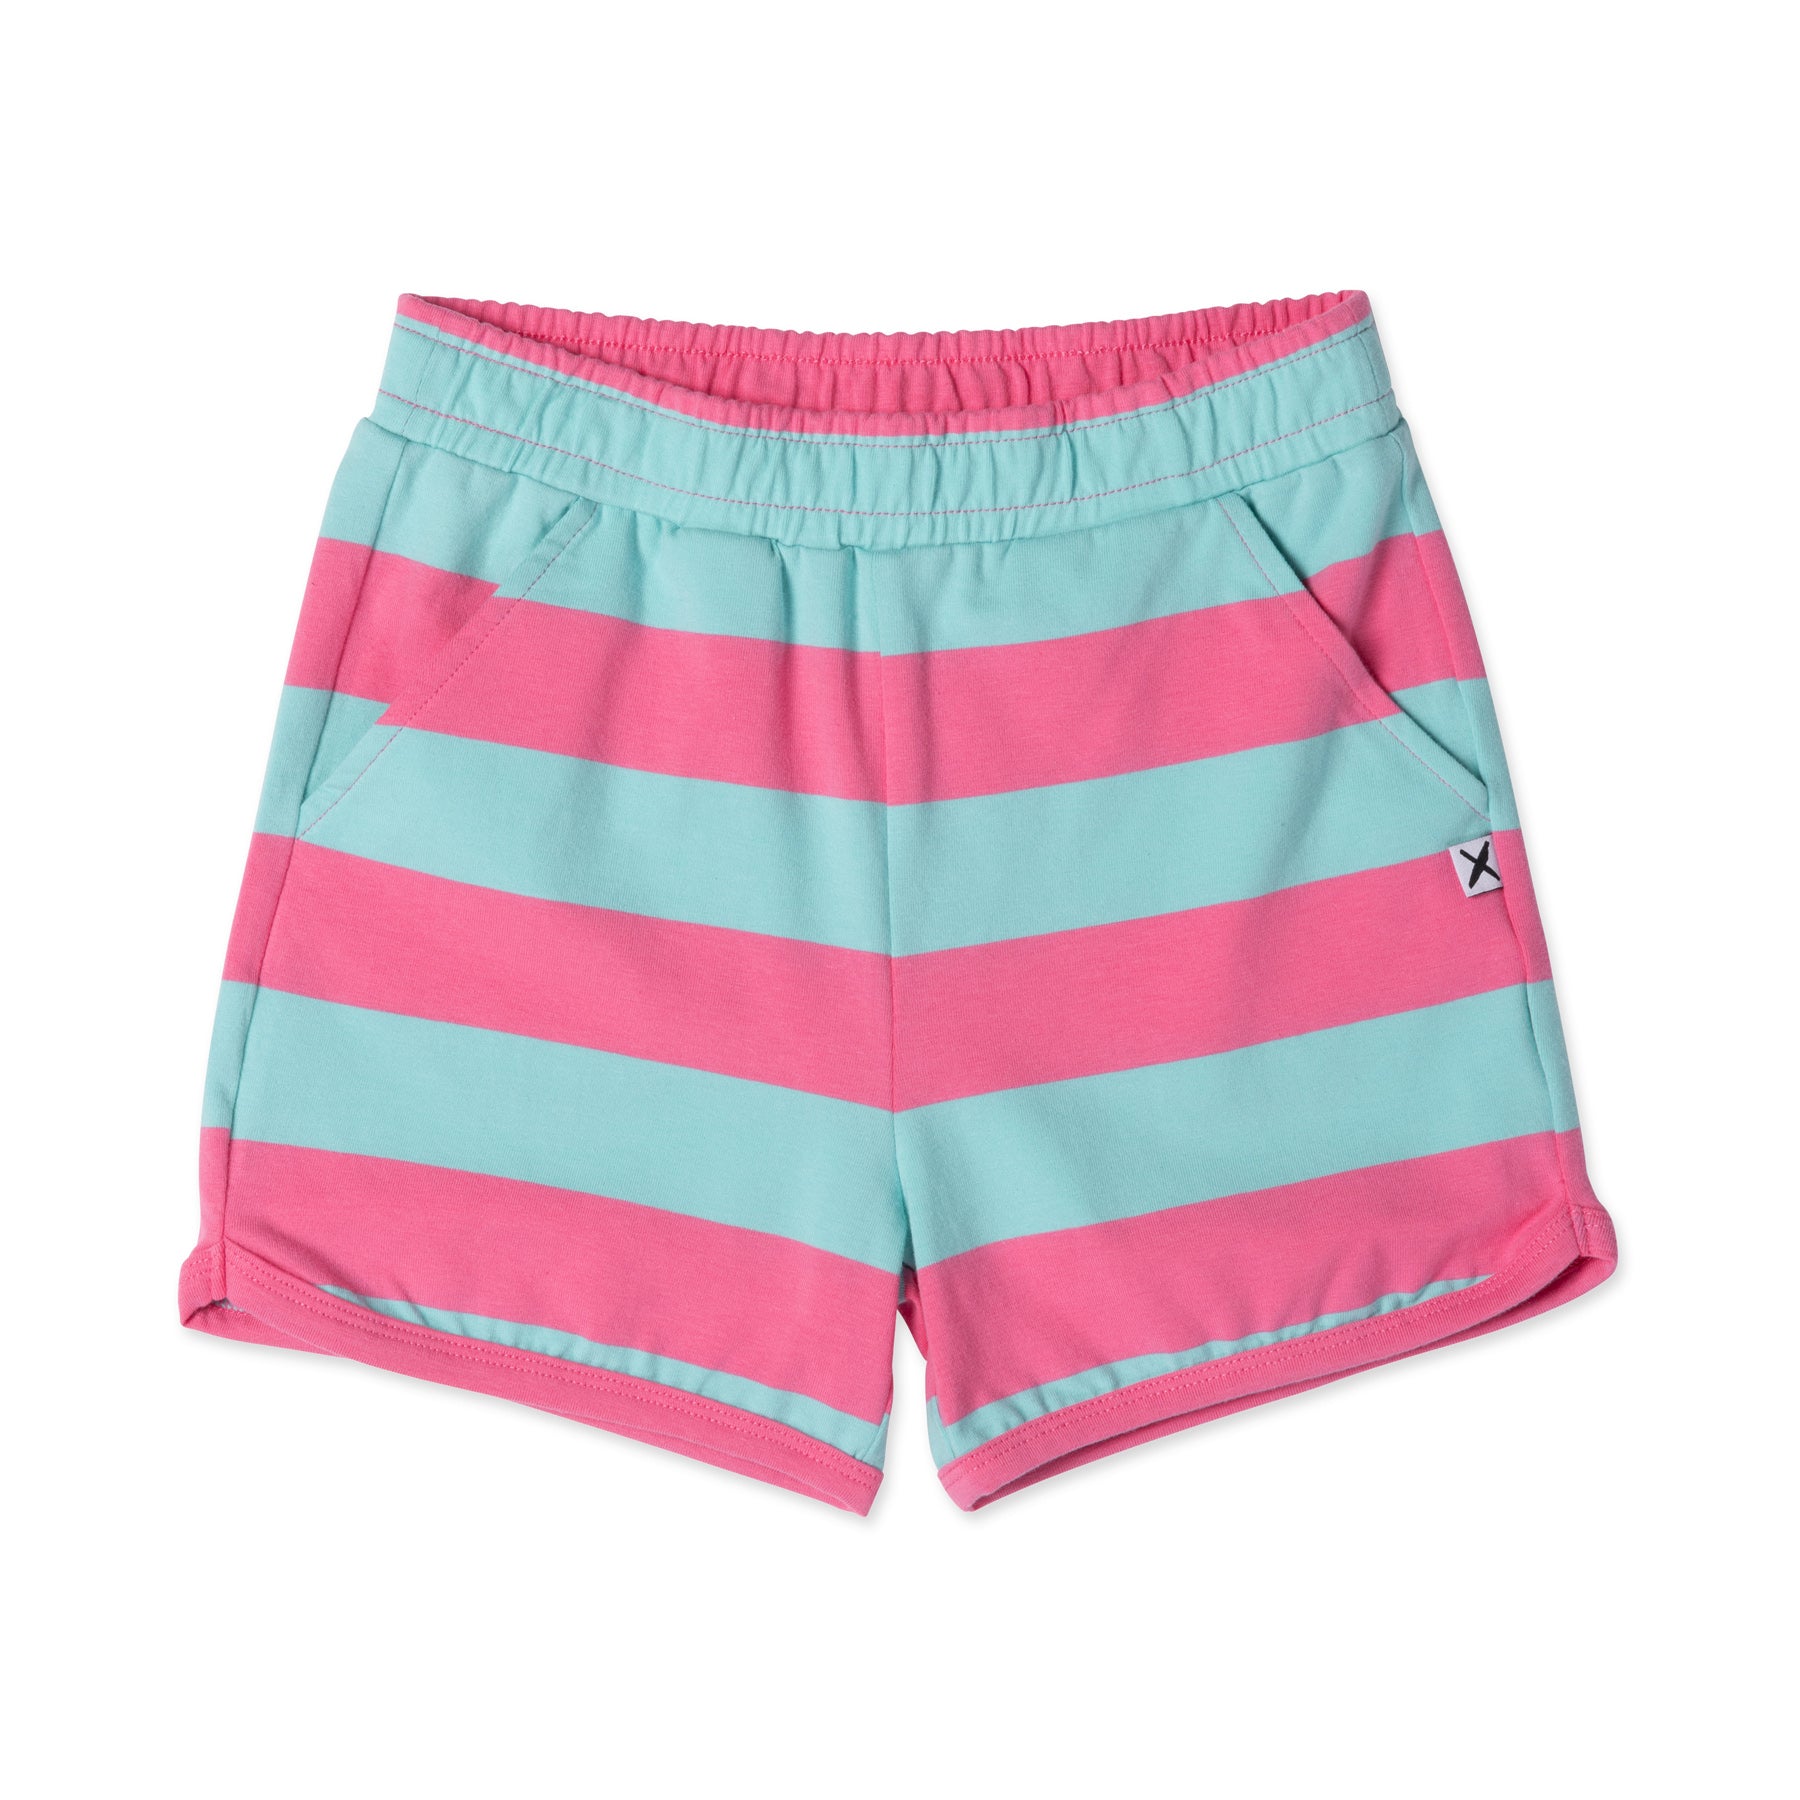 PRE ORDER - Minti - Striped Sport Short - Pink/Teal Stripe